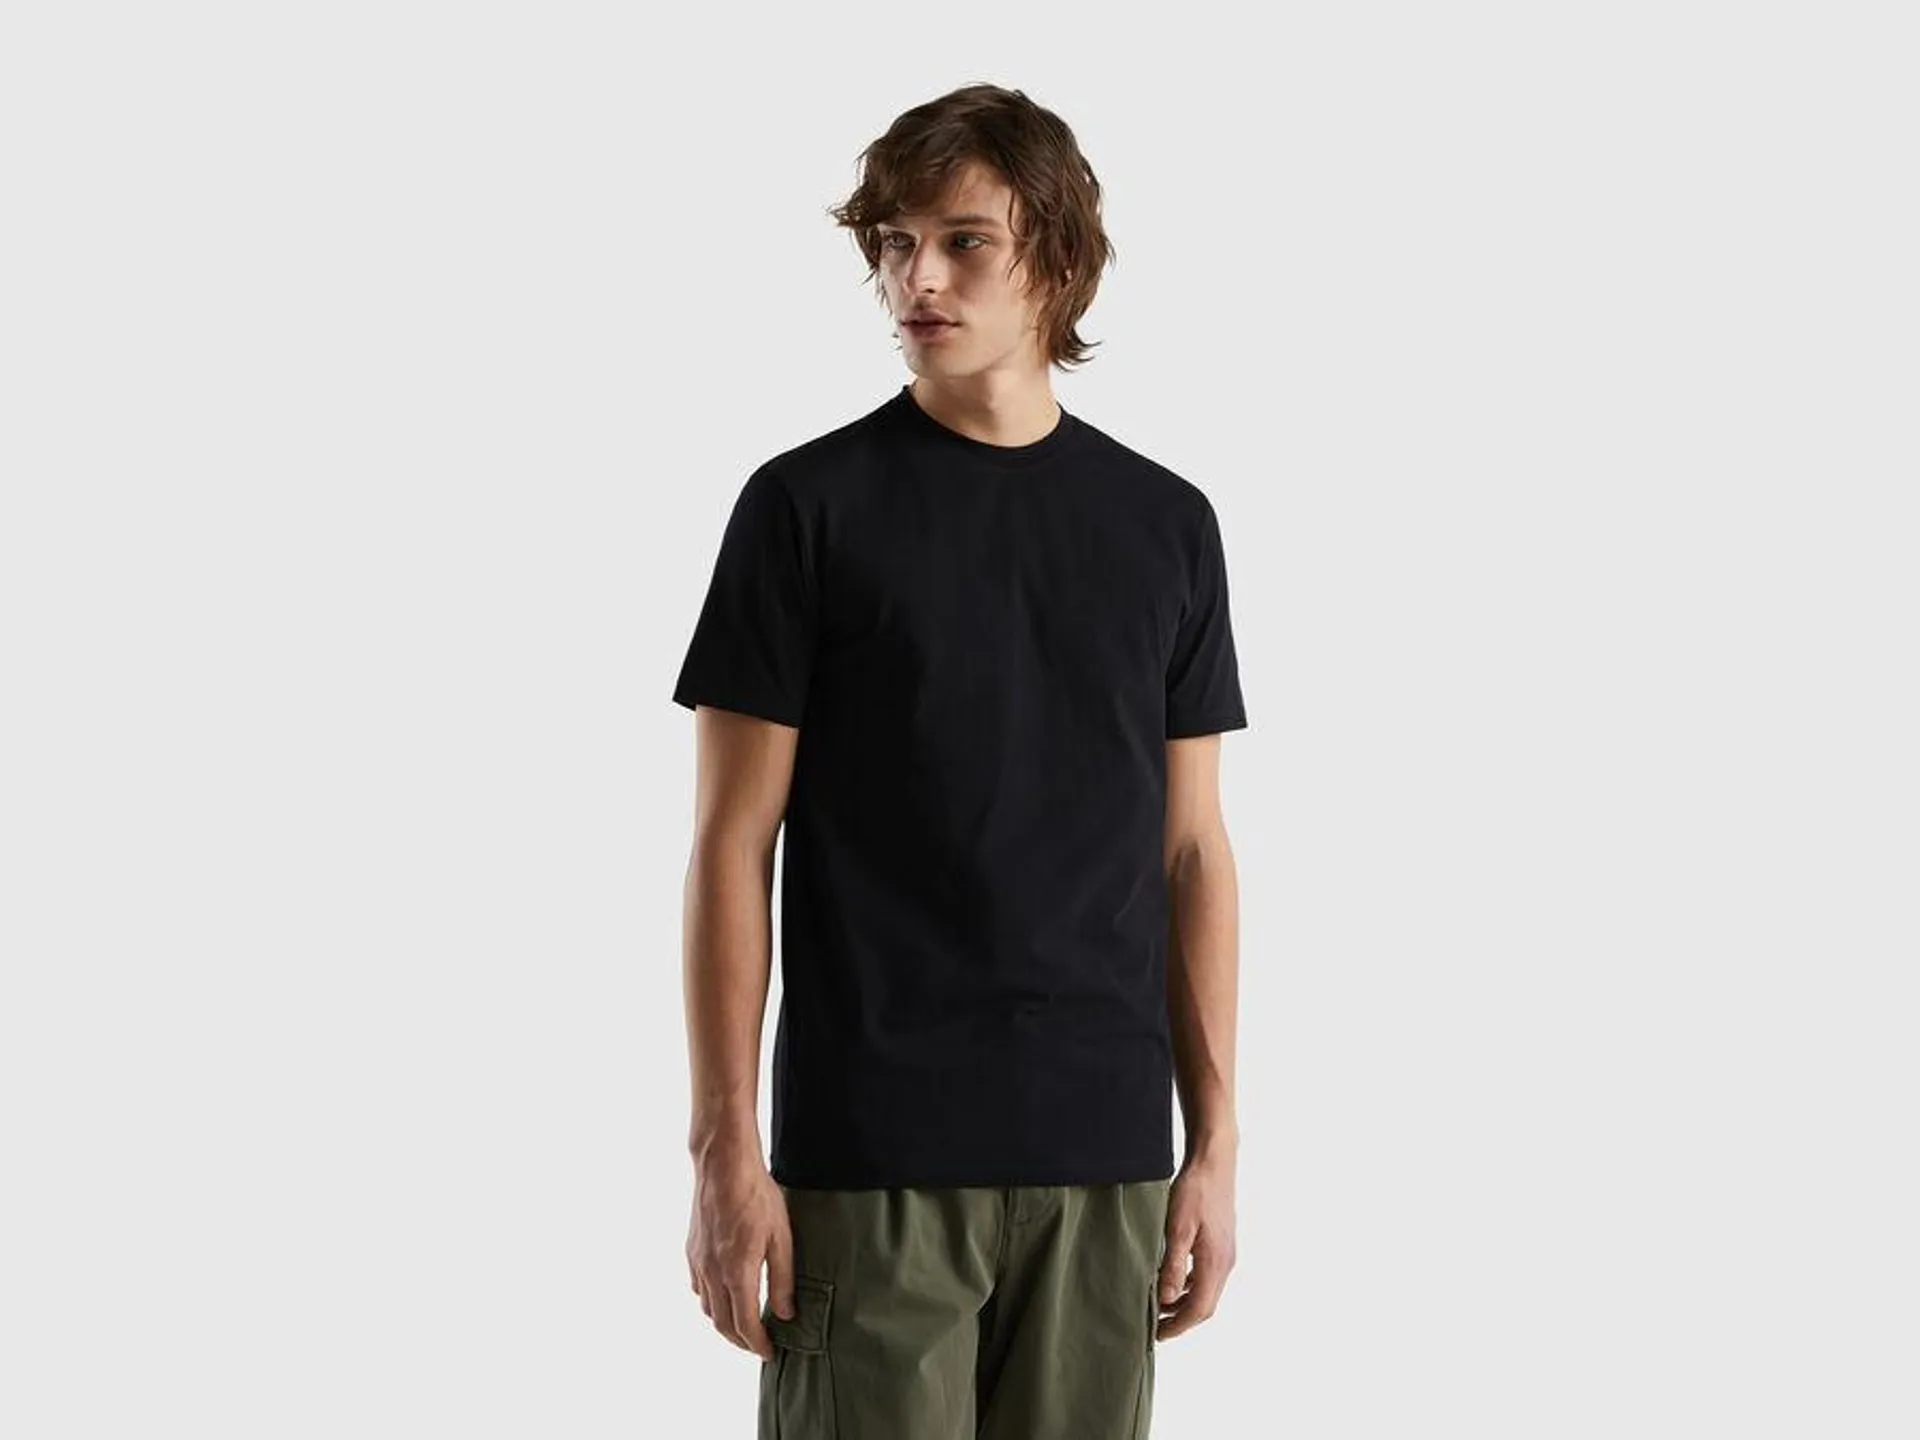 Slim Fit-T-Shirt in stretchiger Baumwolle